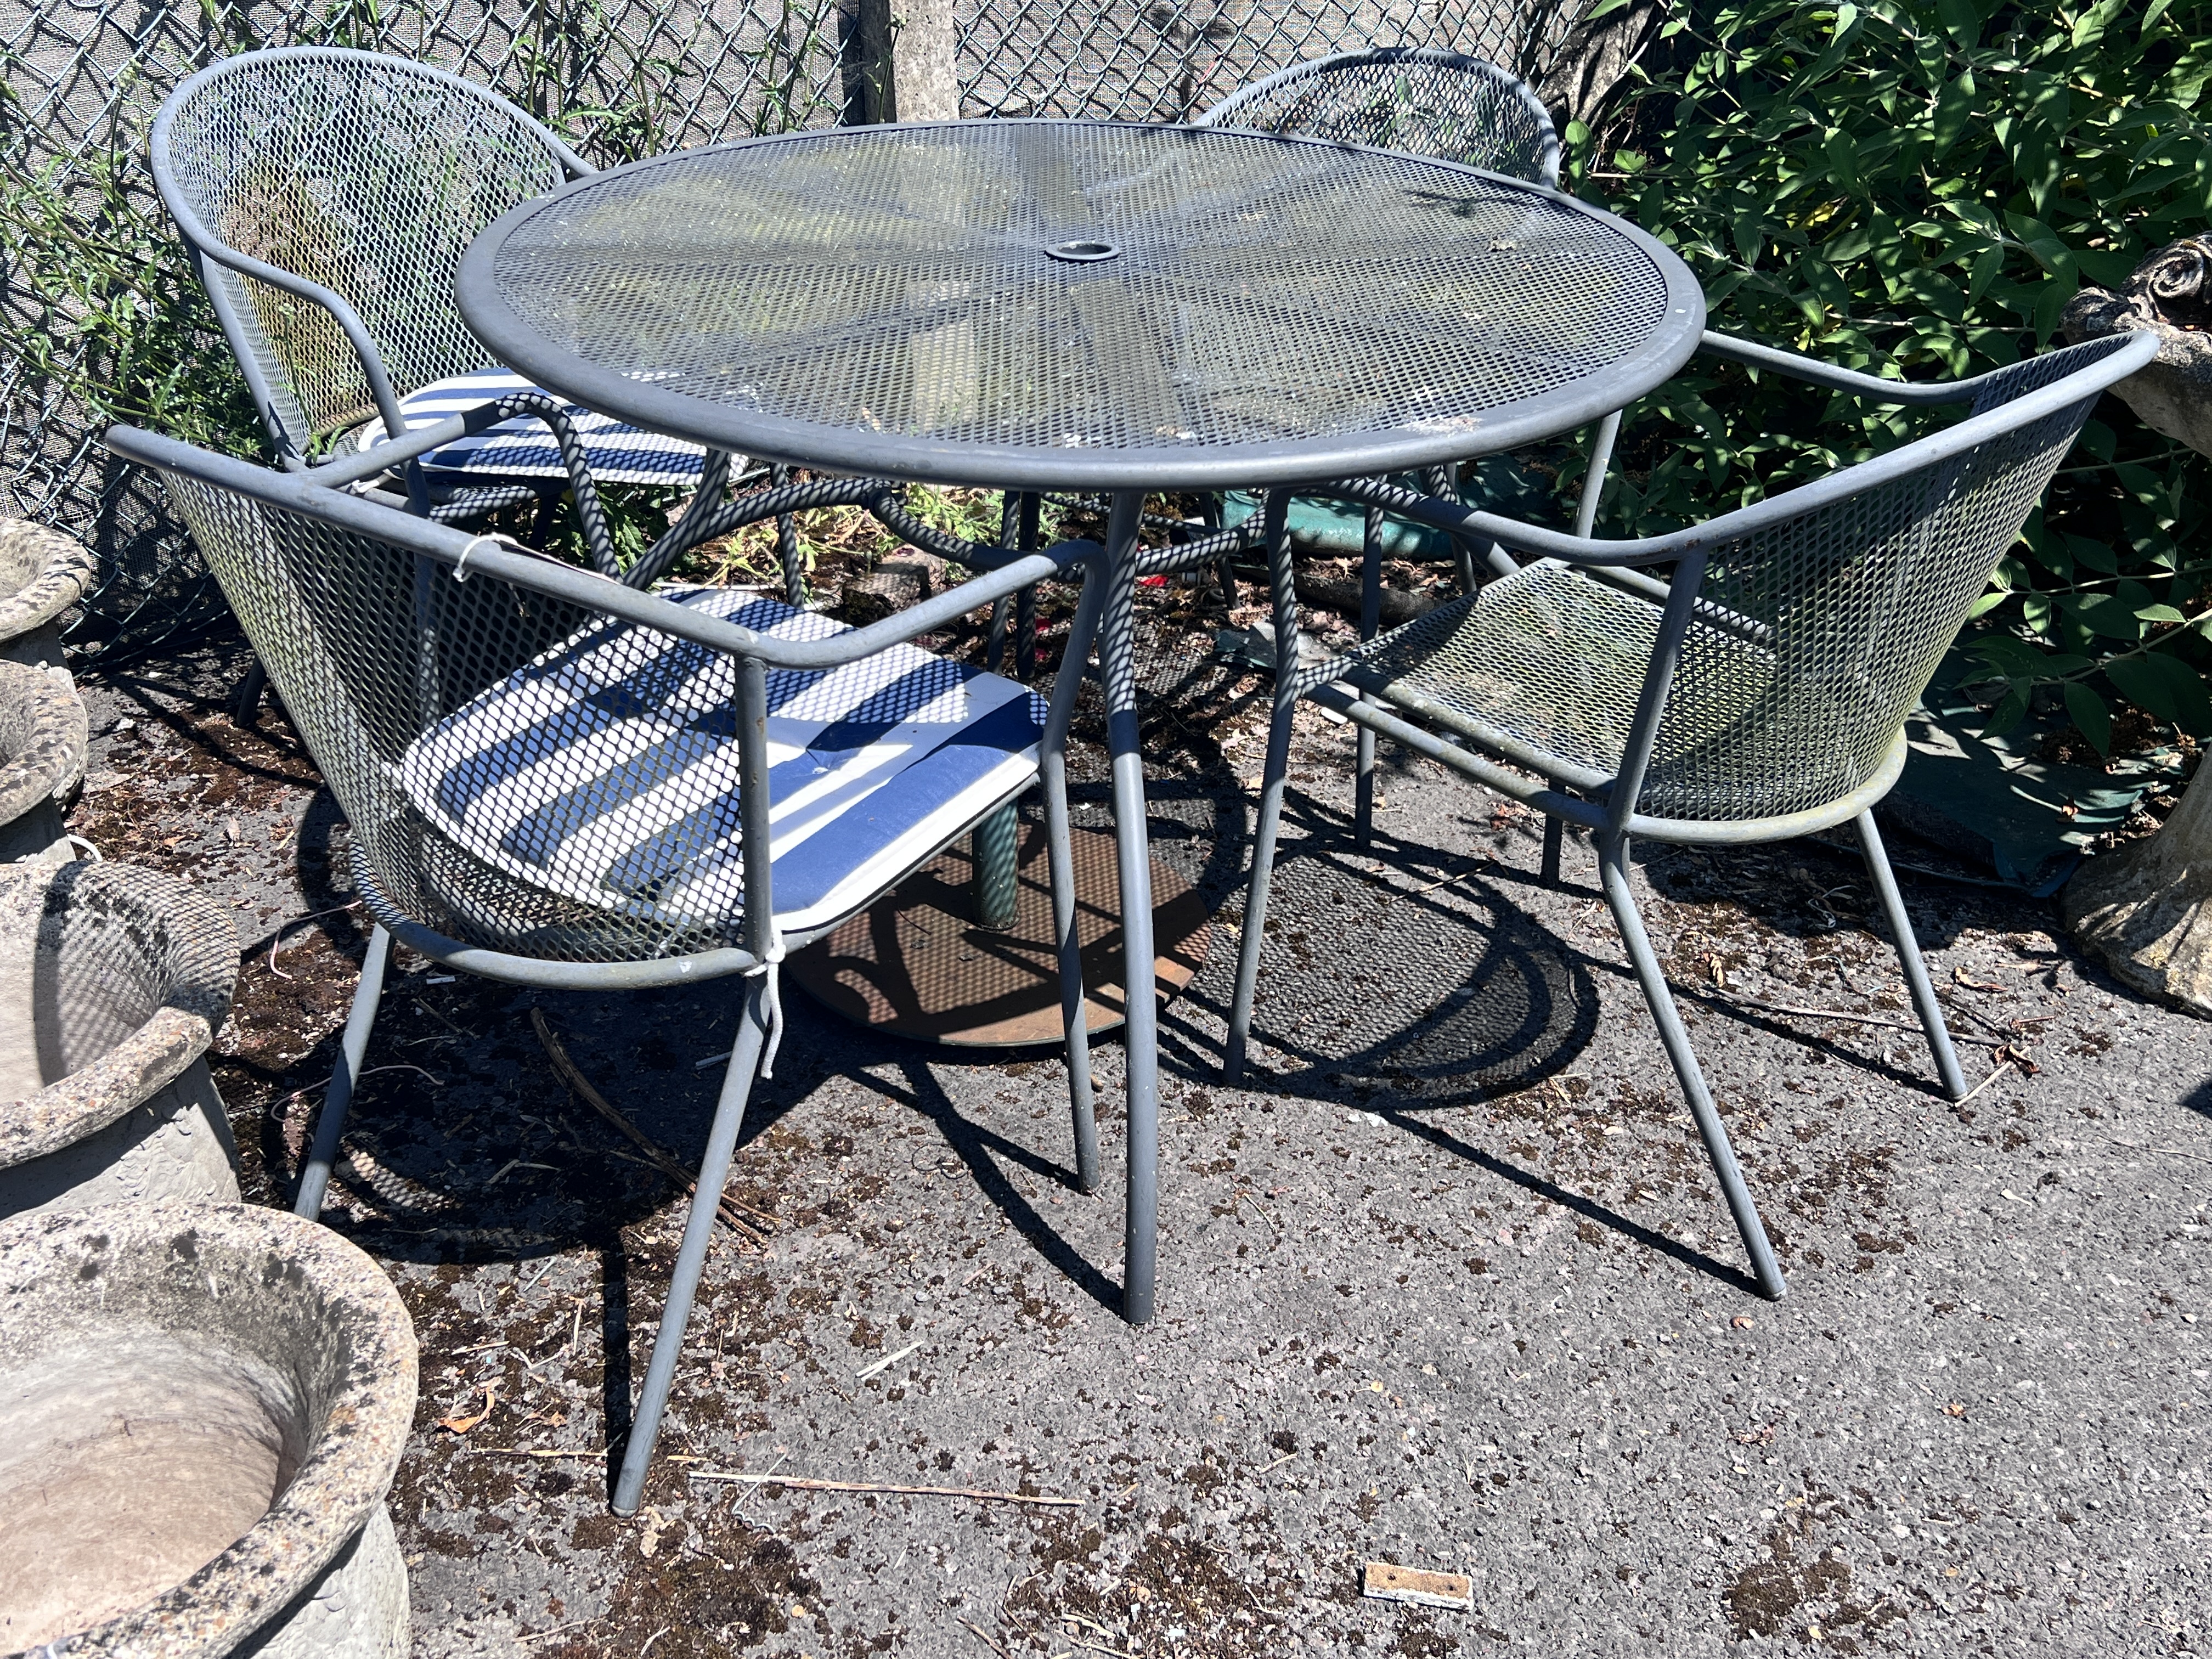 A Kettler circular metal garden table, diameter 110cm, height 72cm, and four chairs